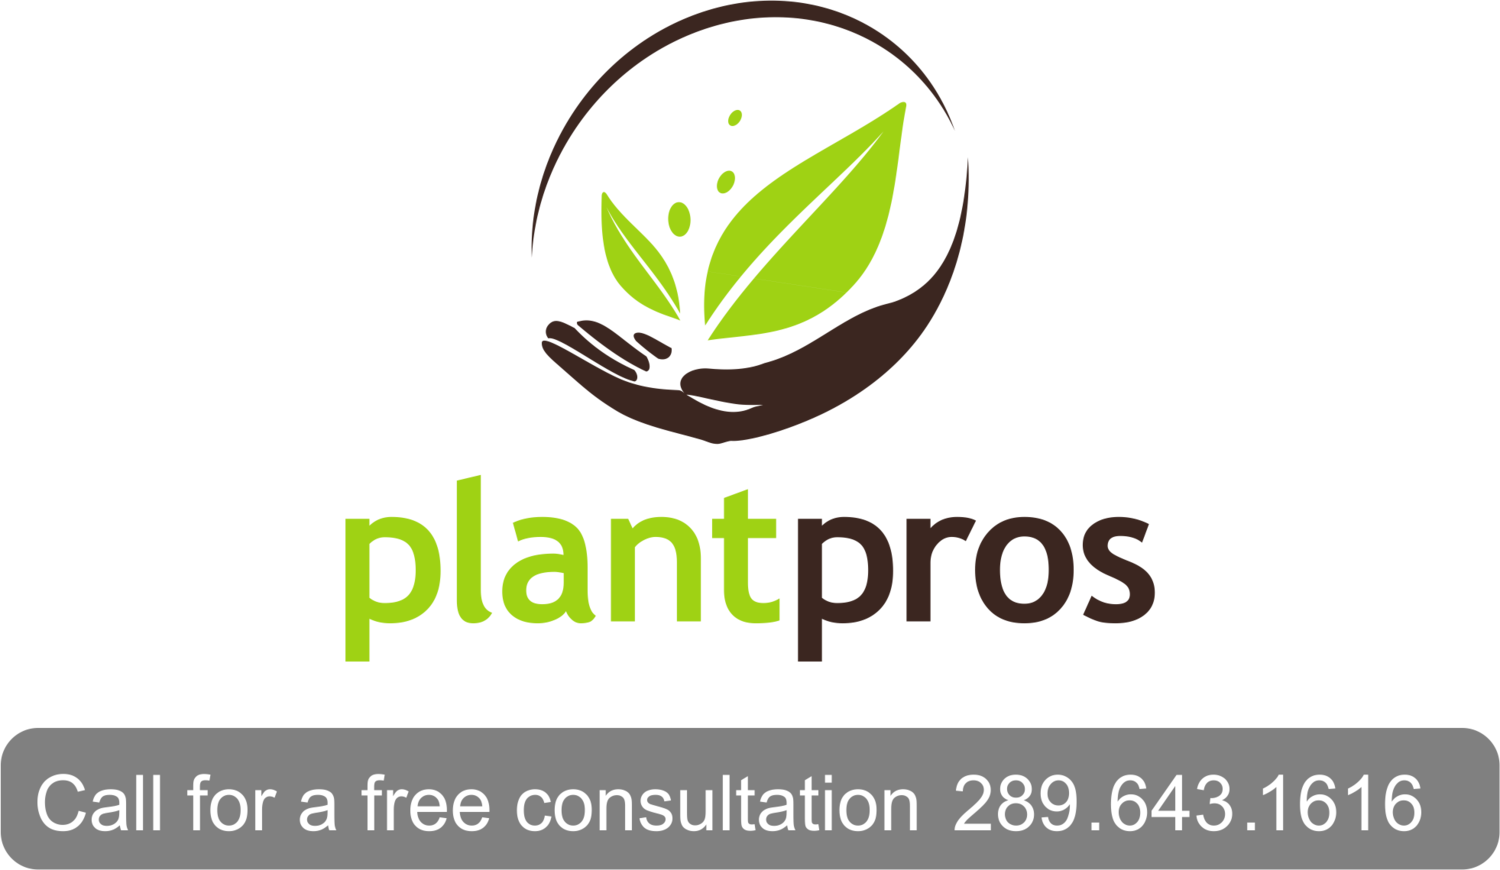 Plantpros Inc.